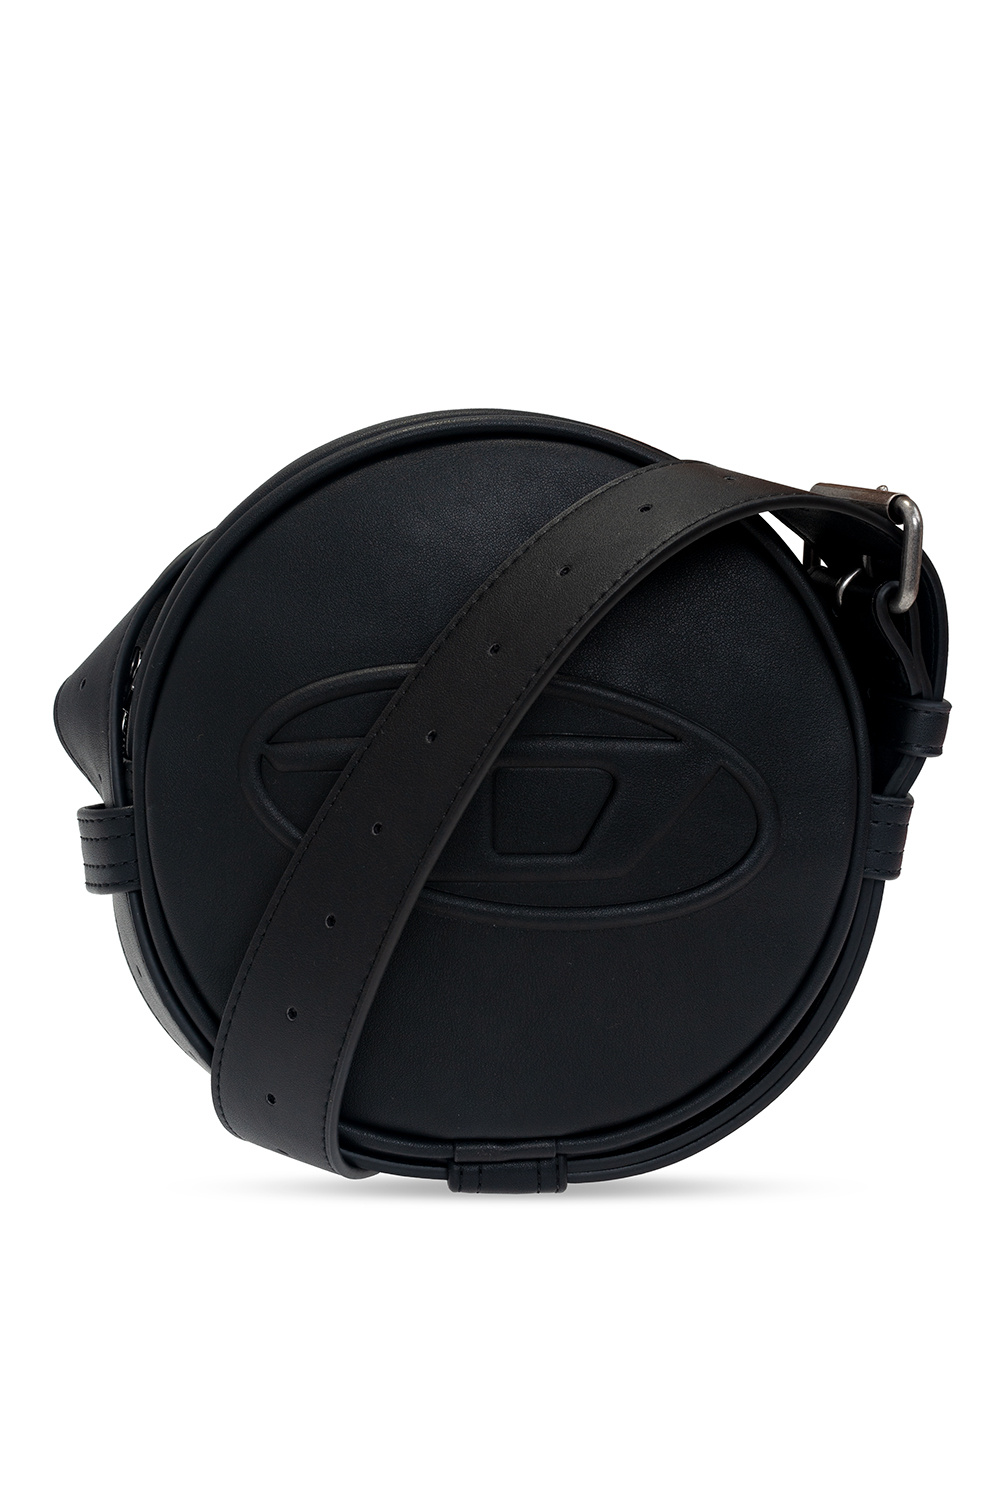 Diesel 'Circle' shoulder bag | Women's Bags | Vitkac